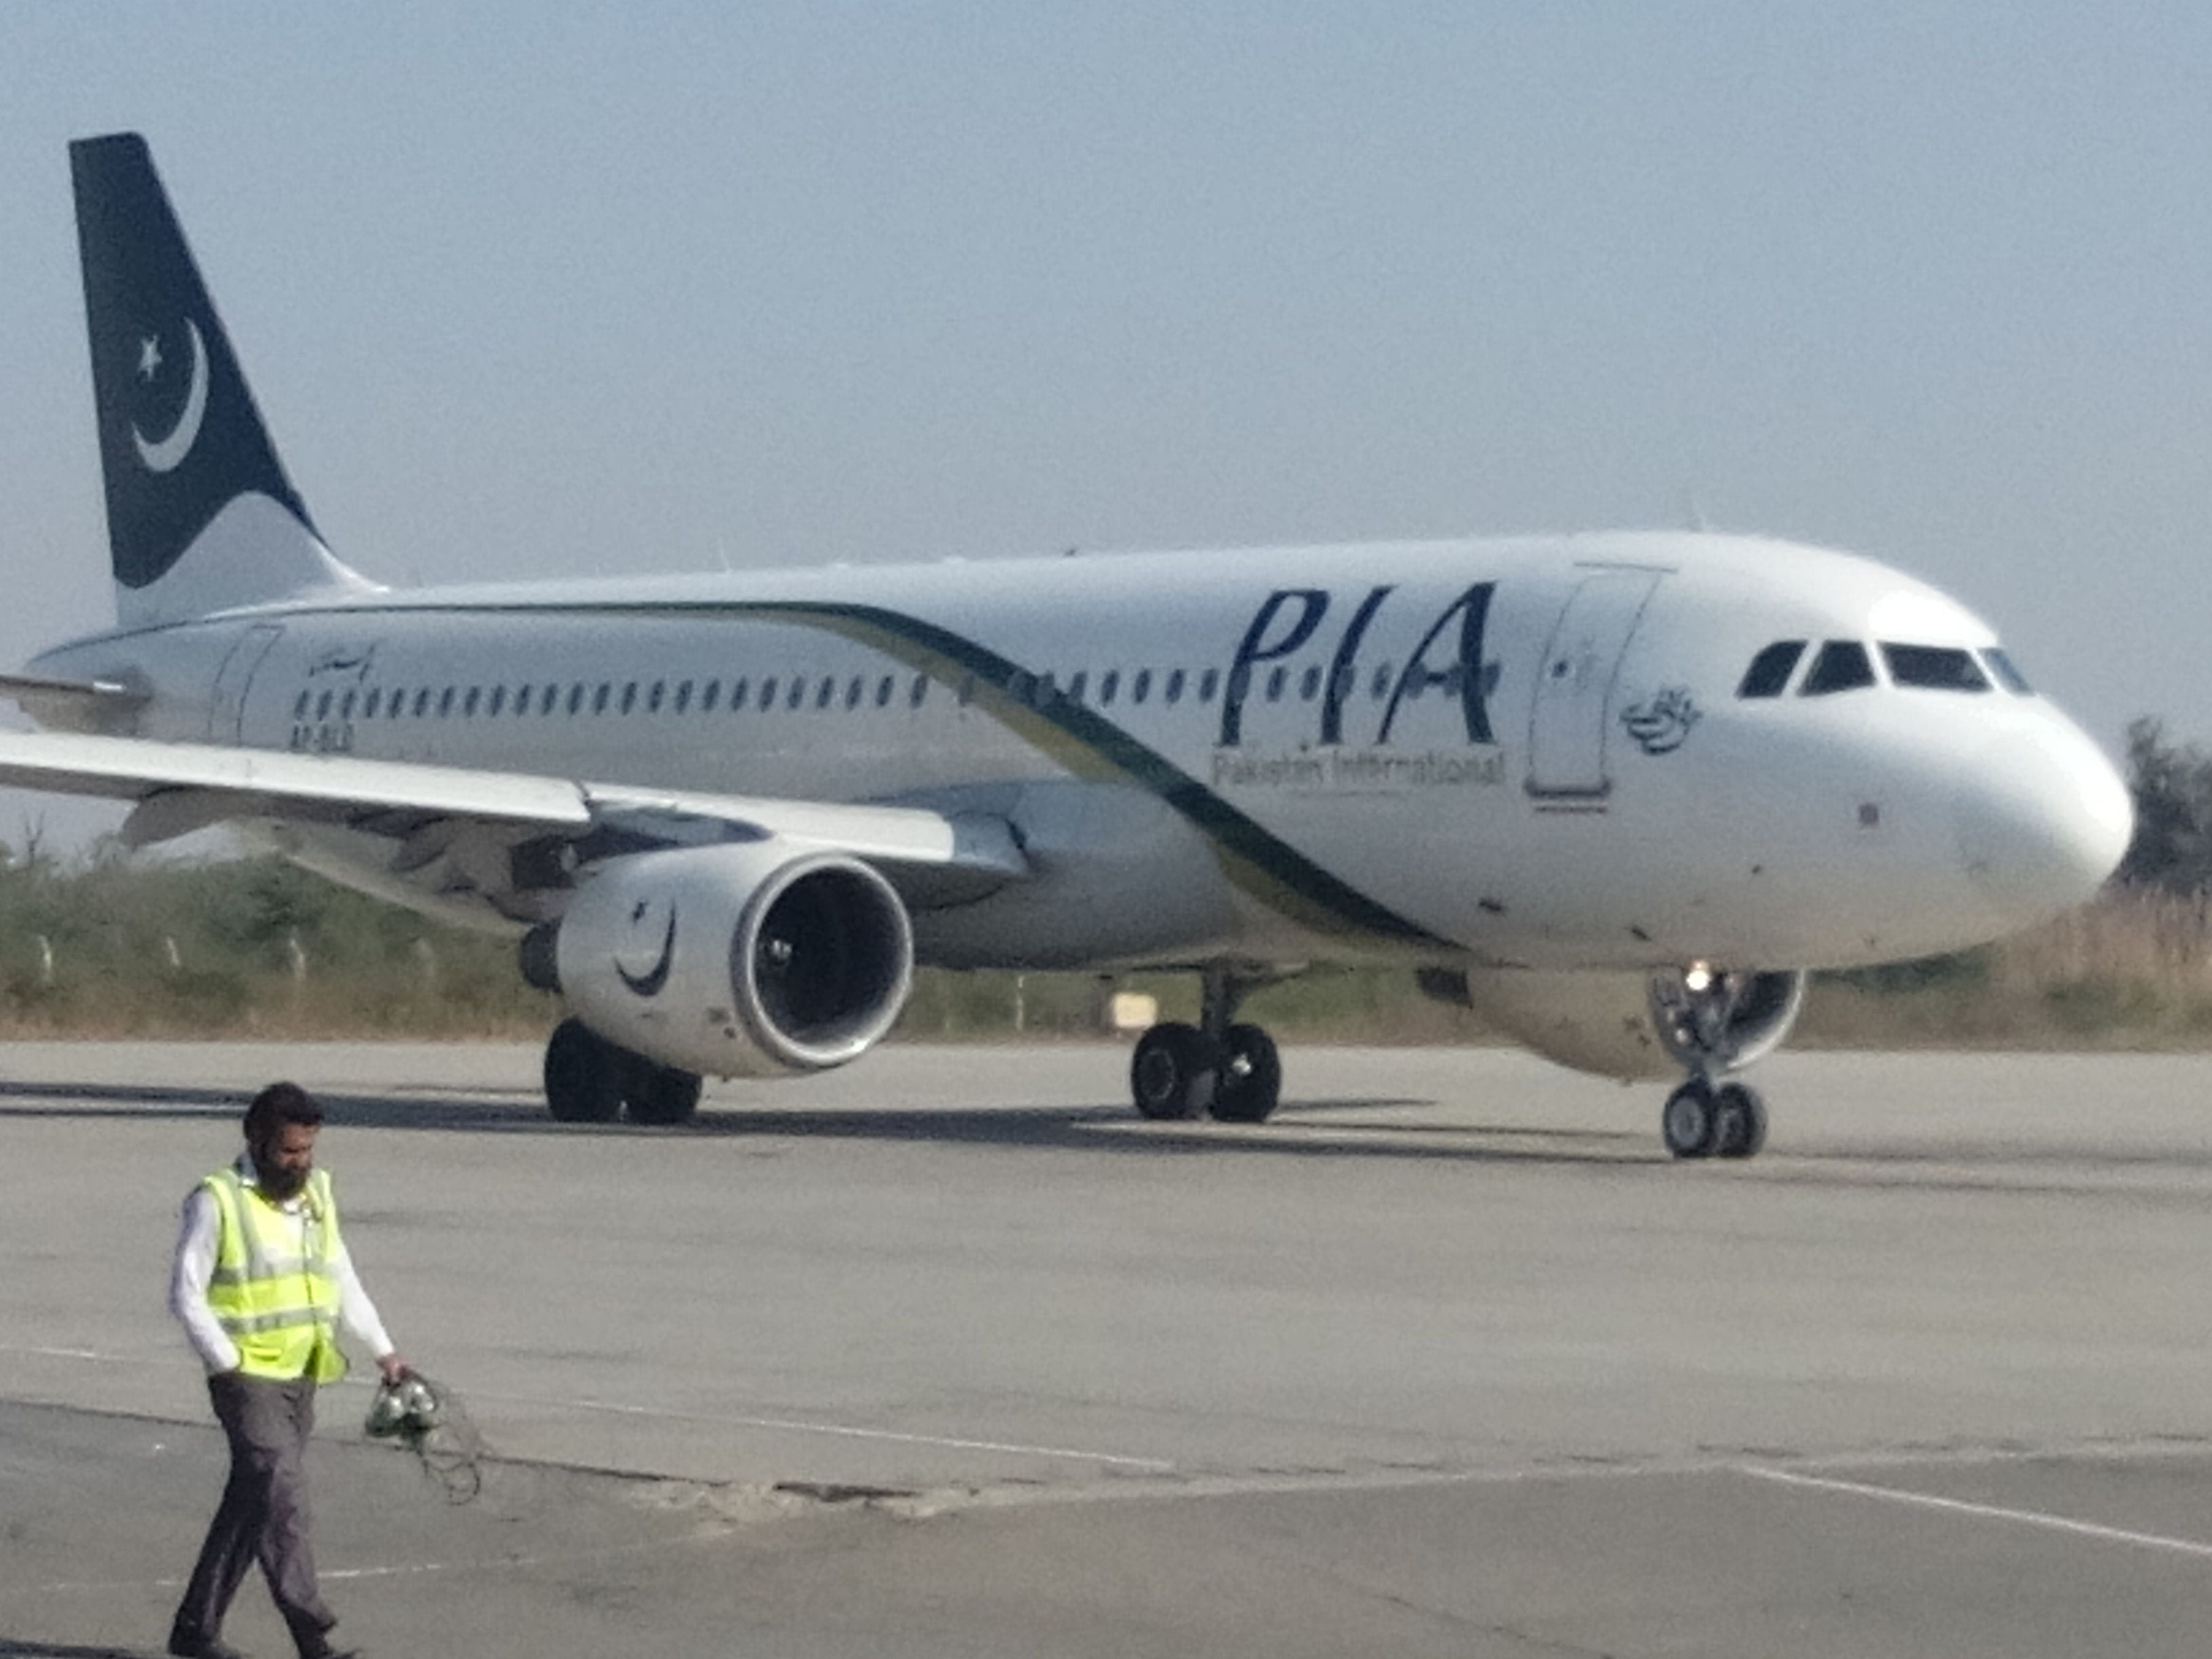 Pakinstan International Airline